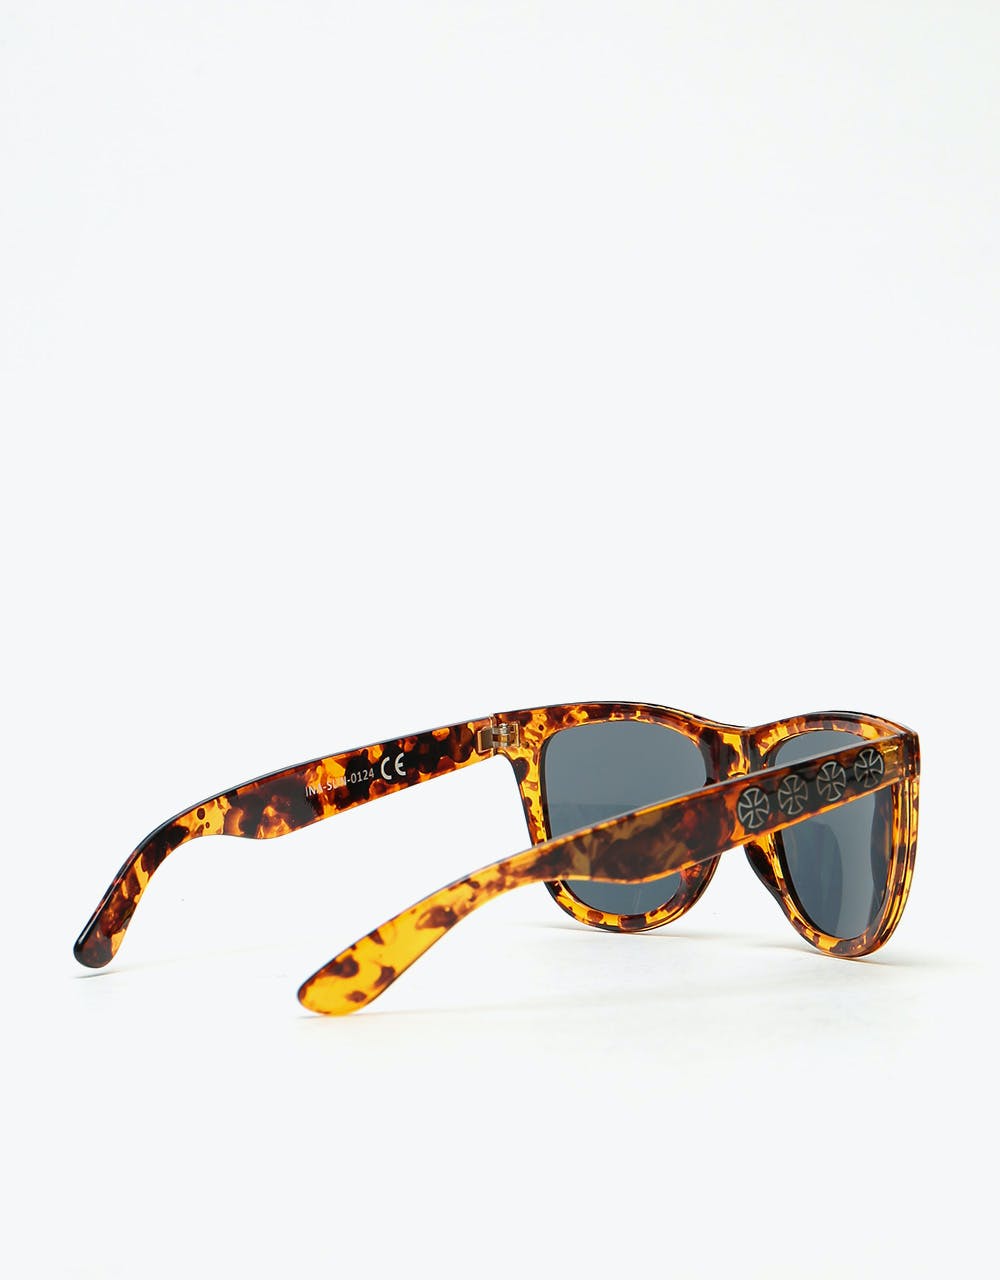 Independent Manner Sunglasses - Tortoise Shell